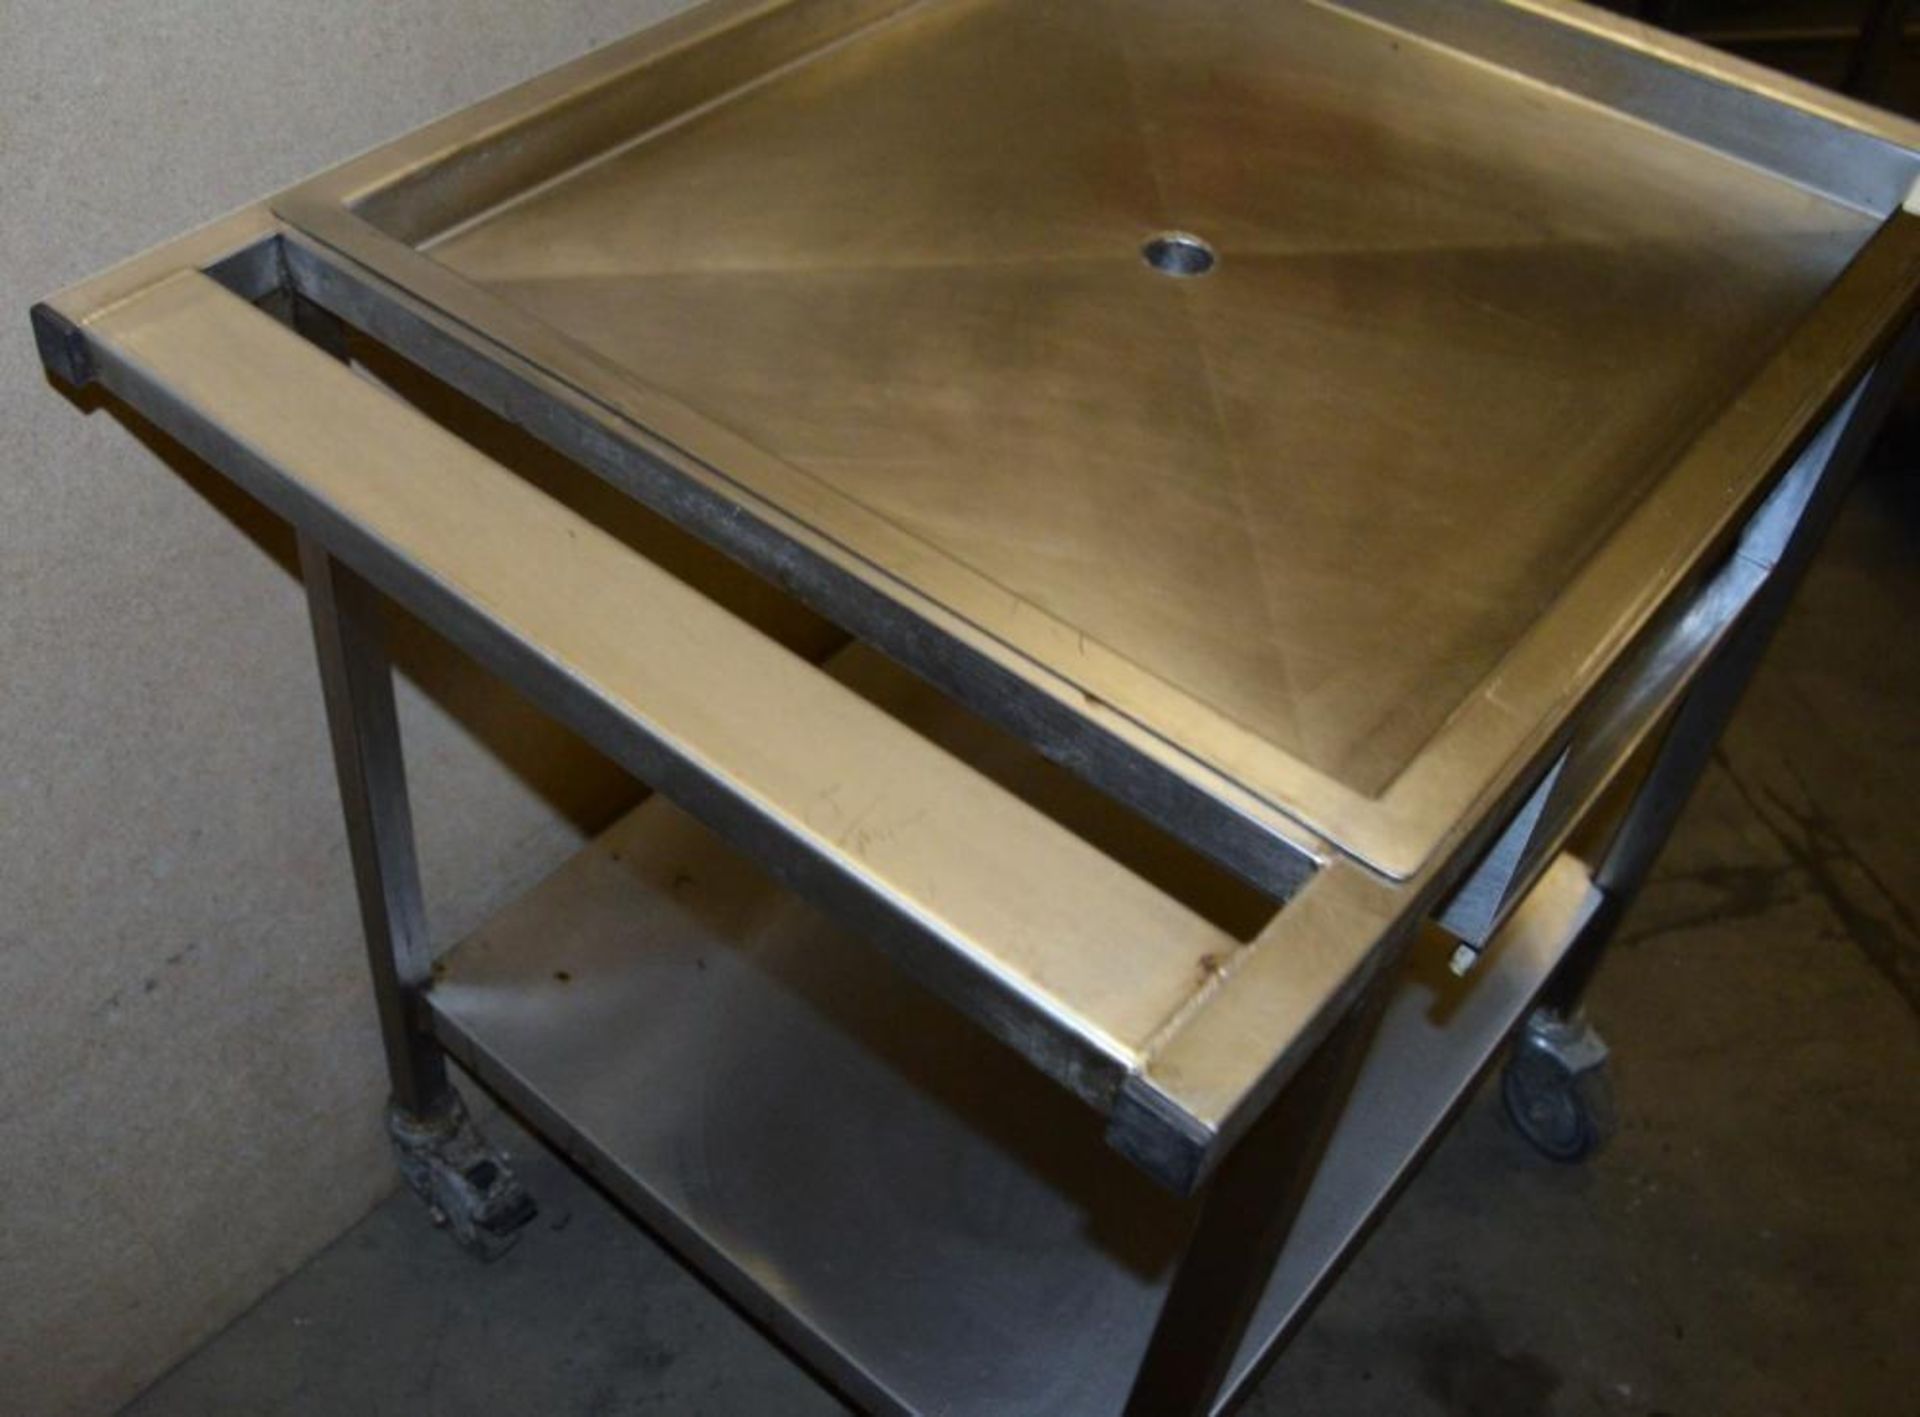 1 x Wheeled Stainless Steel Prep Bench with Drain Hole - Dimensions: 81.5 x 60.5 x 88cm - Ref: J1002 - Bild 2 aus 4